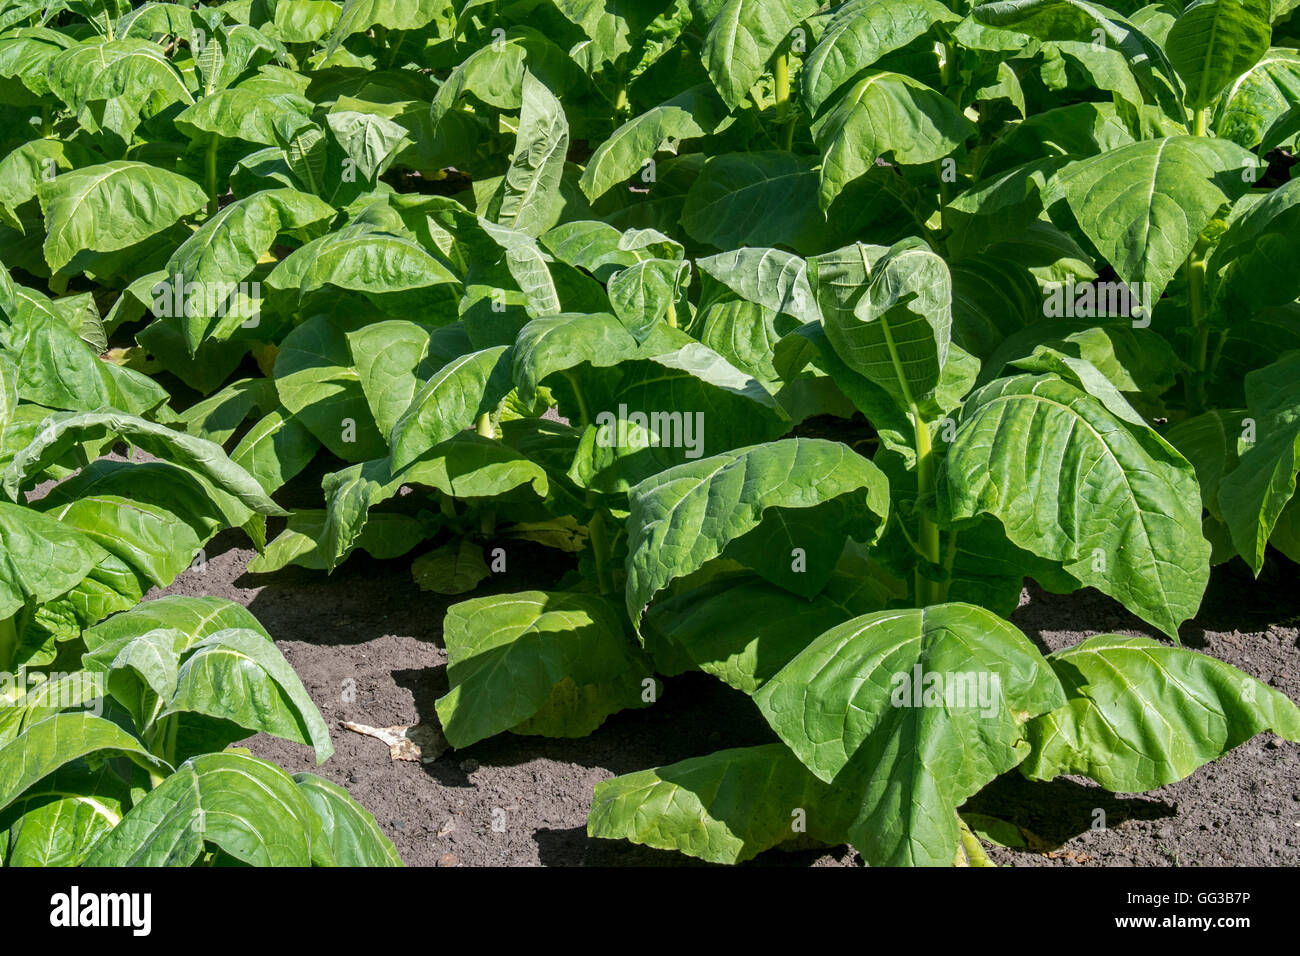 Aztekische Tabak / wilde Tabak (Nicotiana Rustica) Pflanzen im Feld Stockfoto